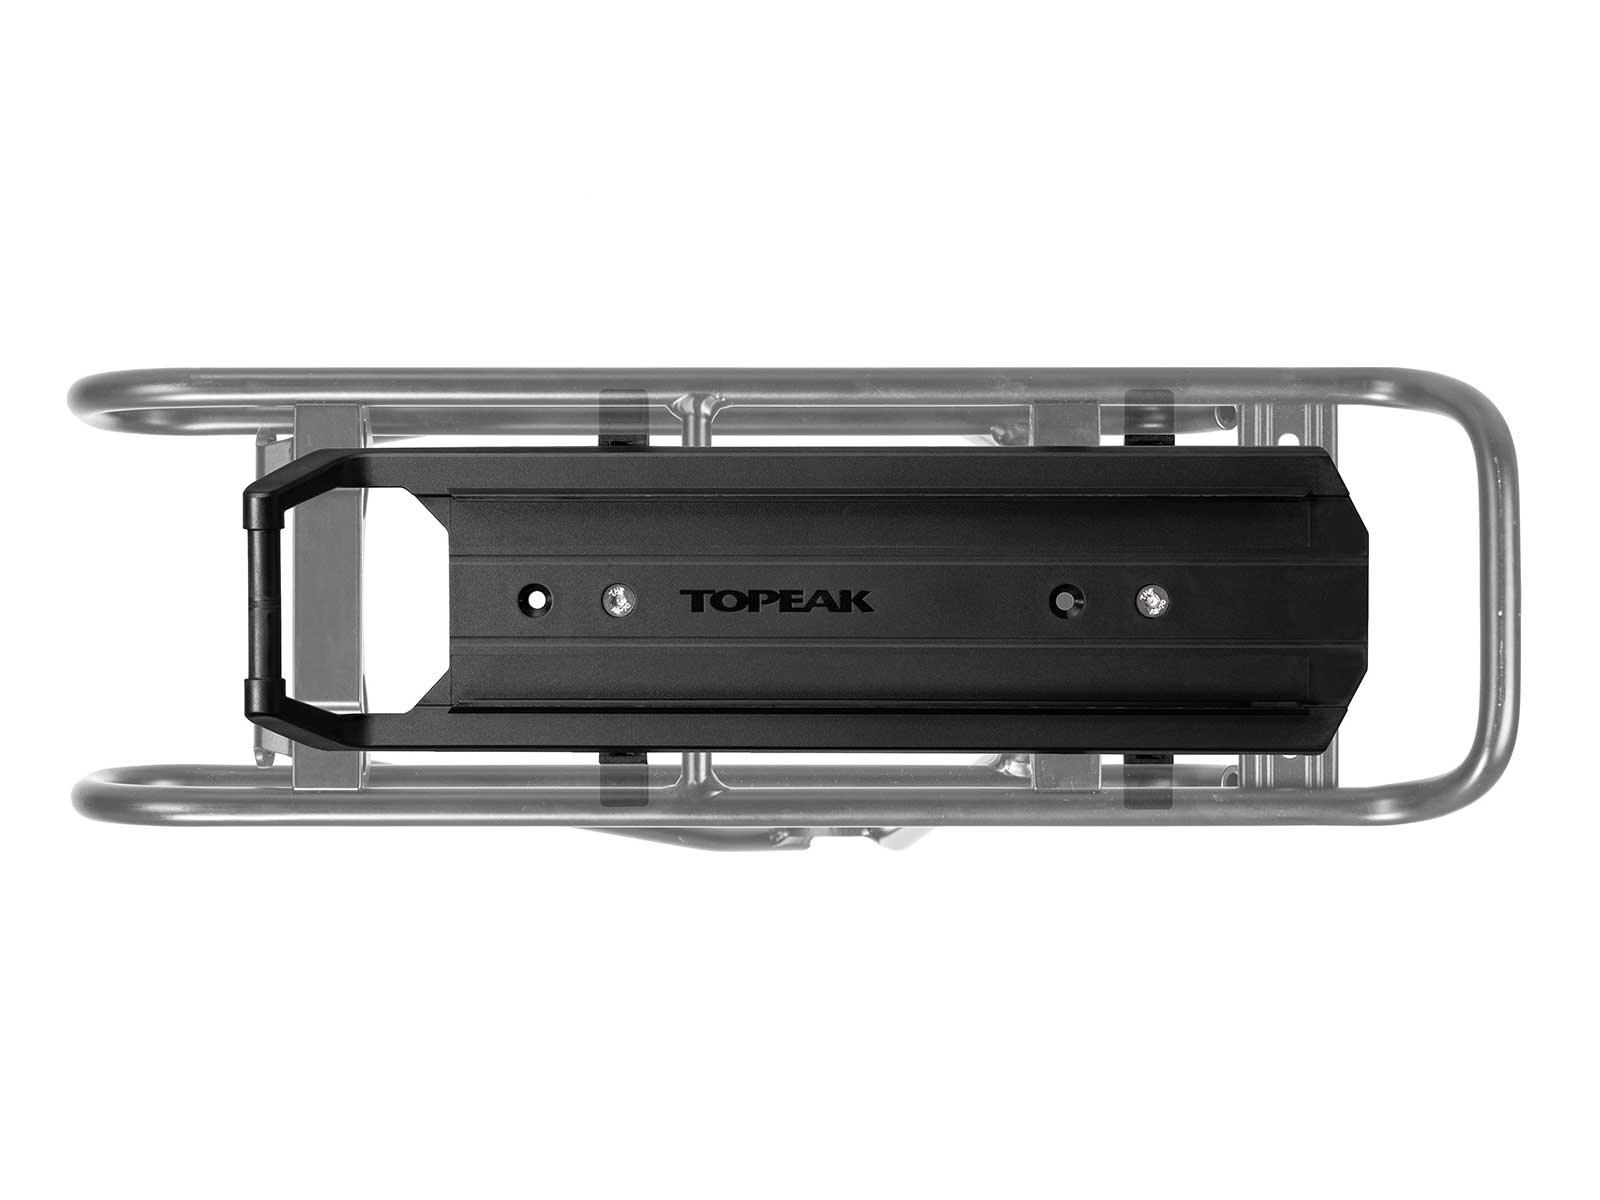 Topeak Mtx Rack Adapter Top Sellers, 59% OFF | www.ingeniovirtual.com